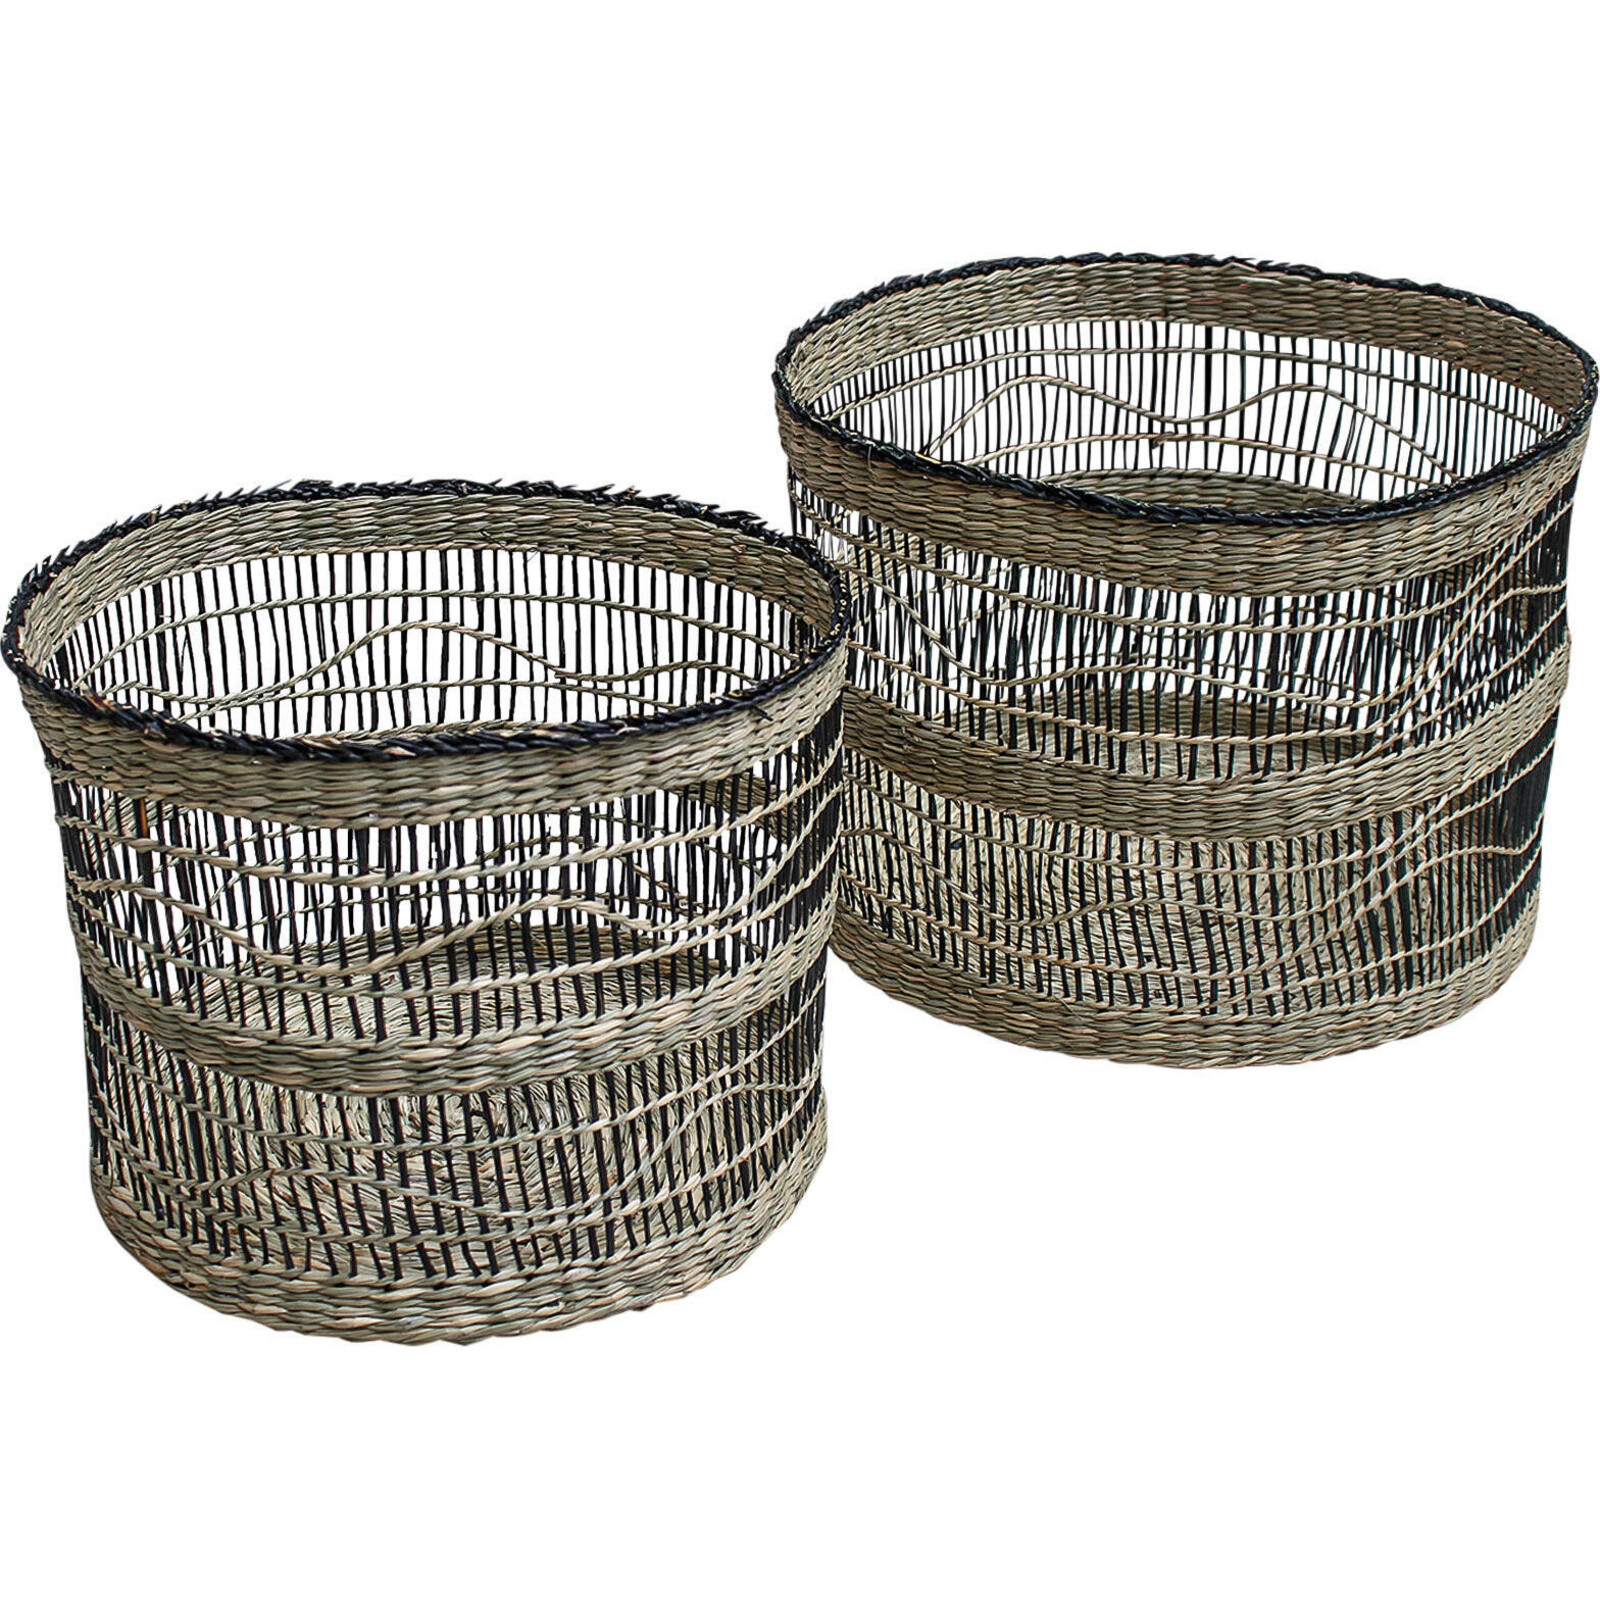 Woven Seagrass Round Basket S/2